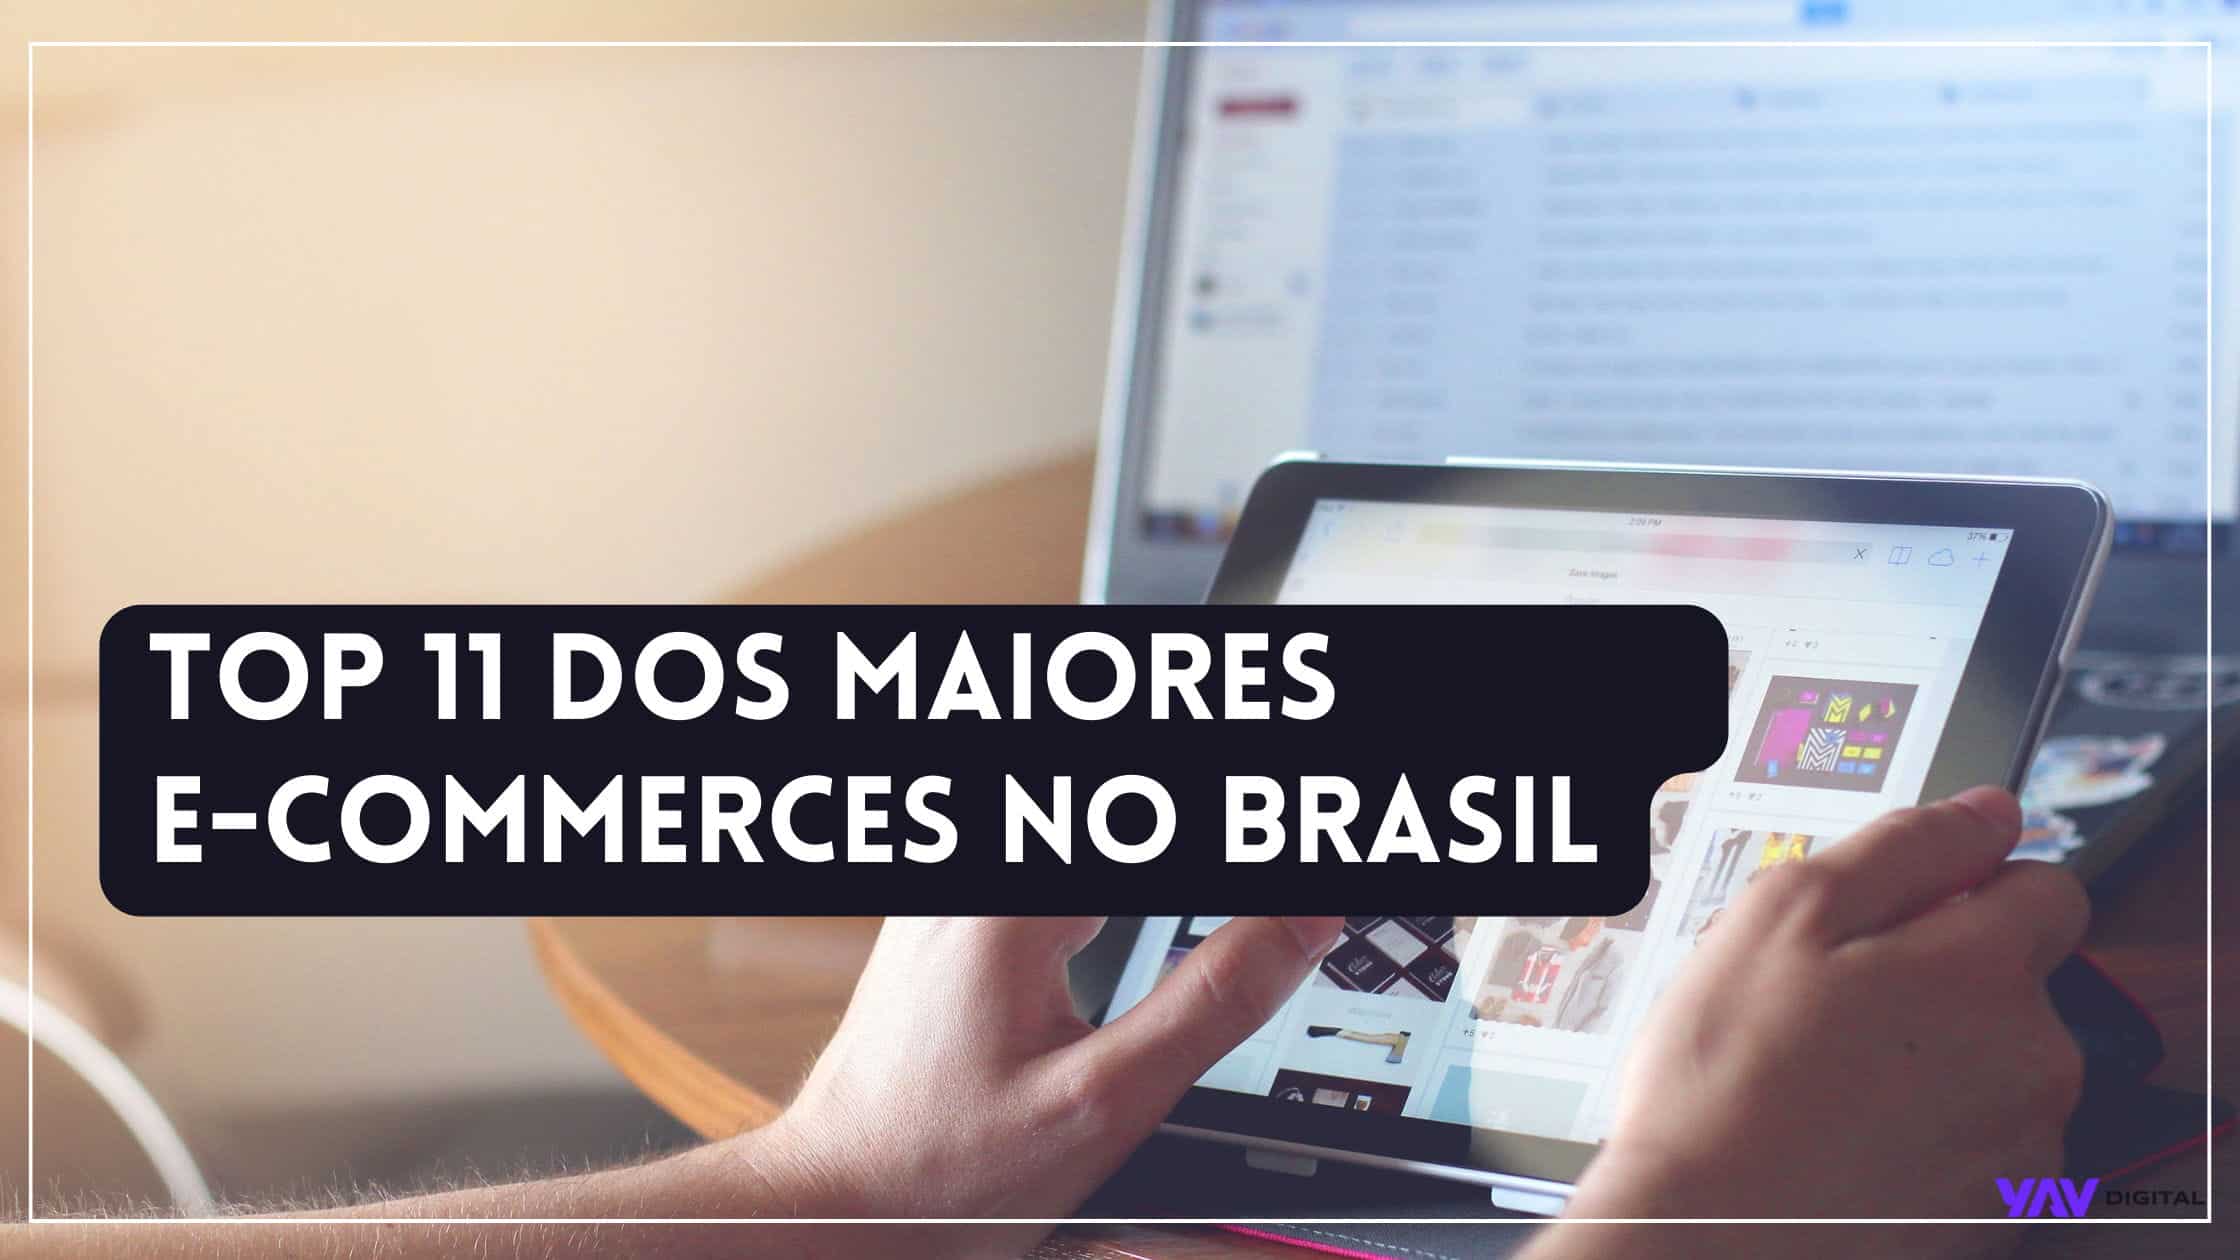 Top 11 dos maiores ecommerces no Brasil